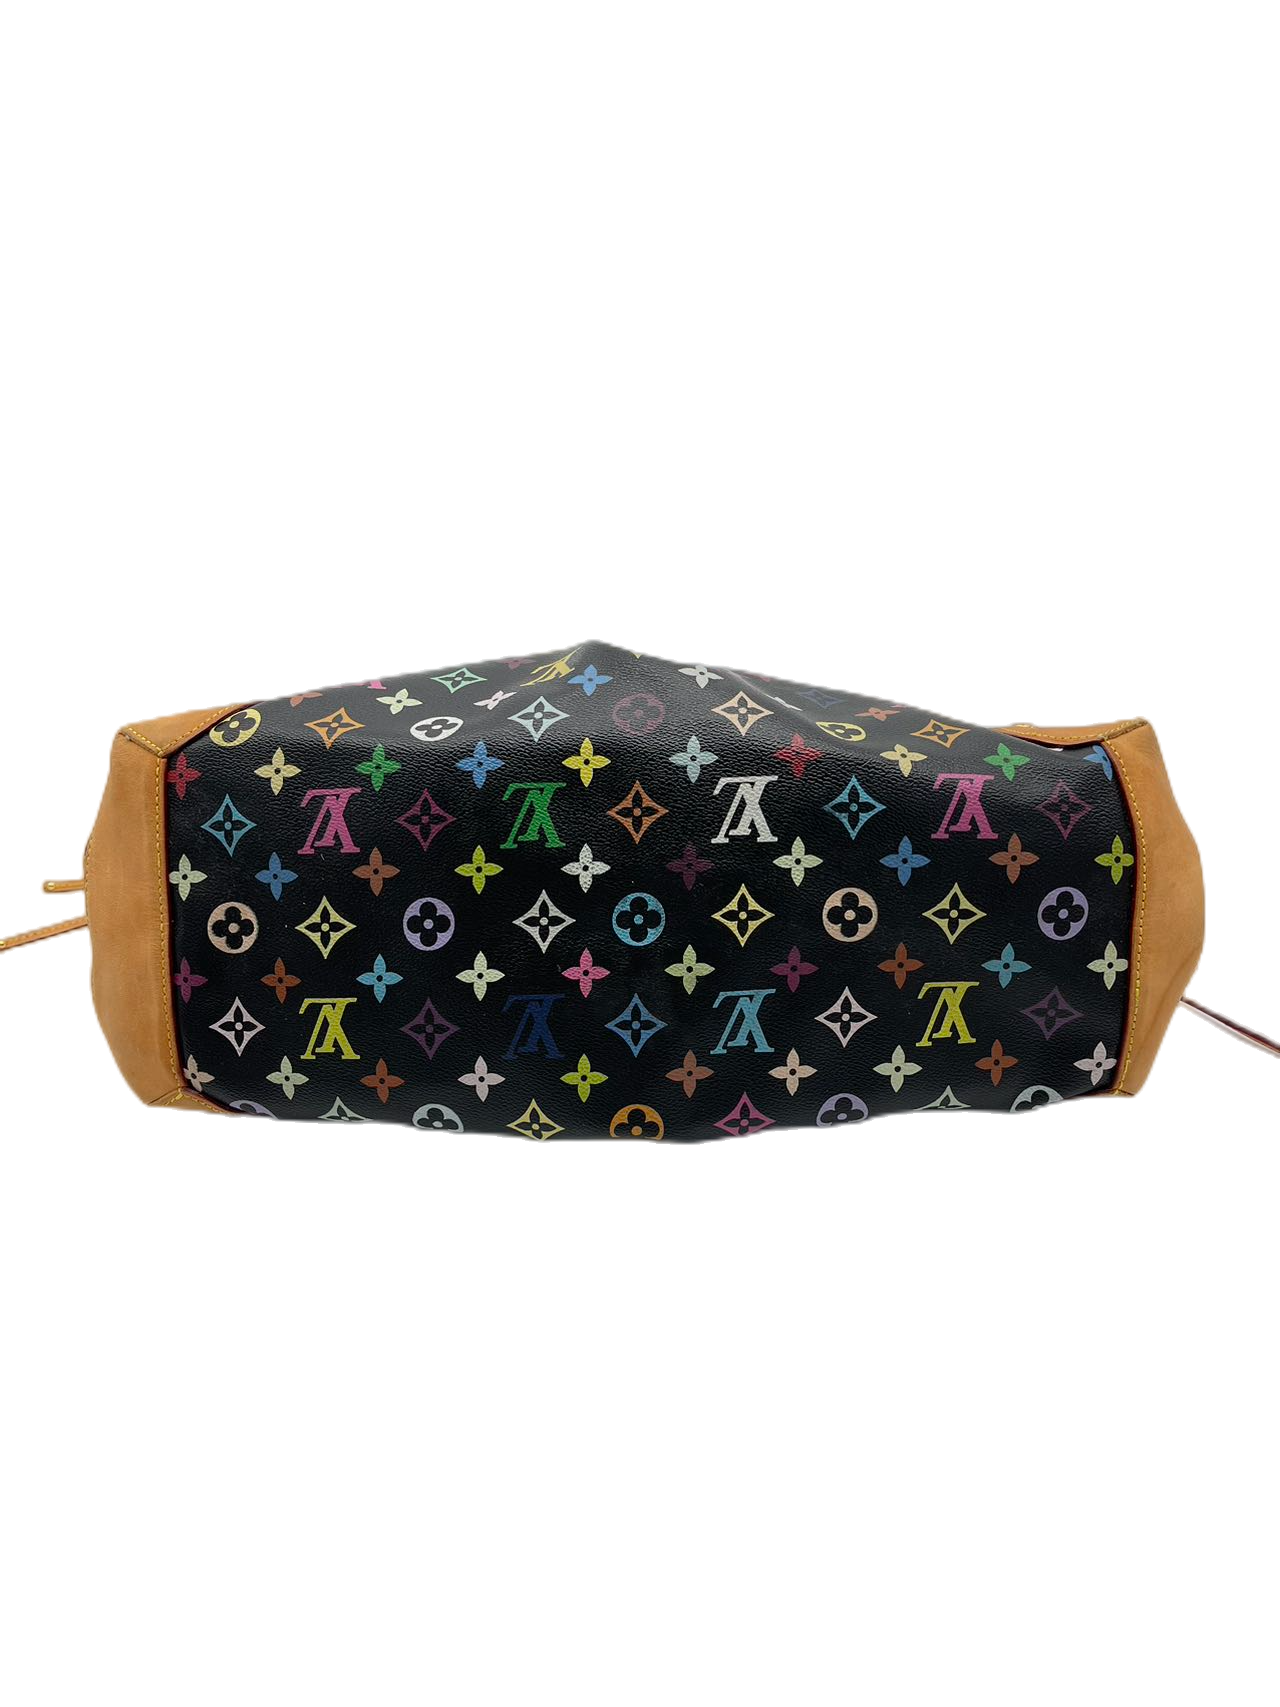 Preloved Louis Vuitton Multicolor Ursula Shoulder Bag Satchel